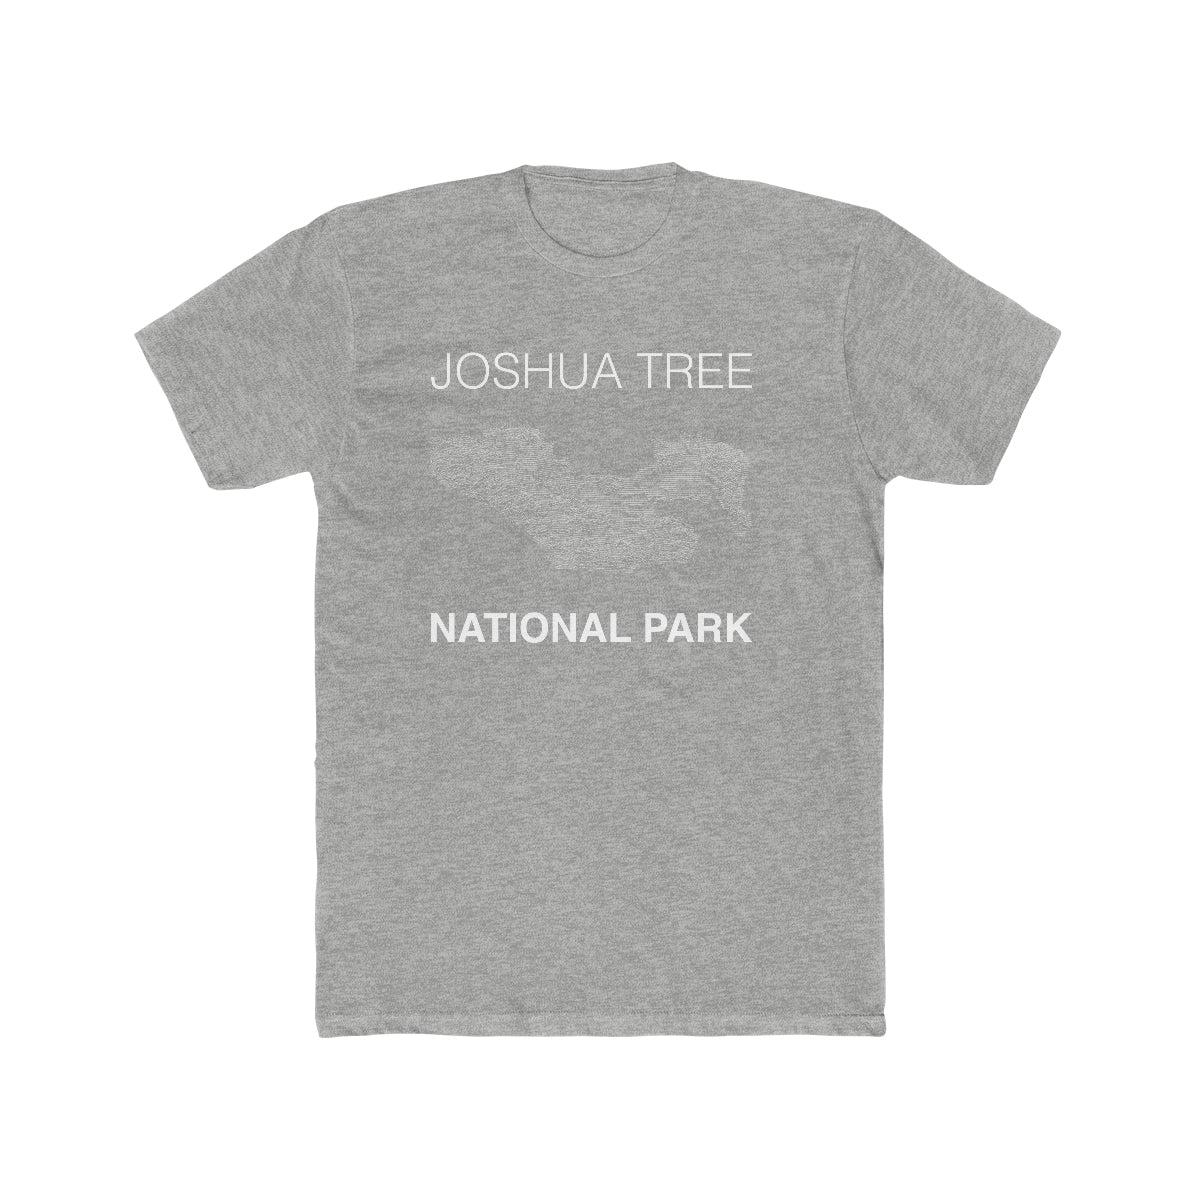 Joshua Tree National Park T-Shirt Lines